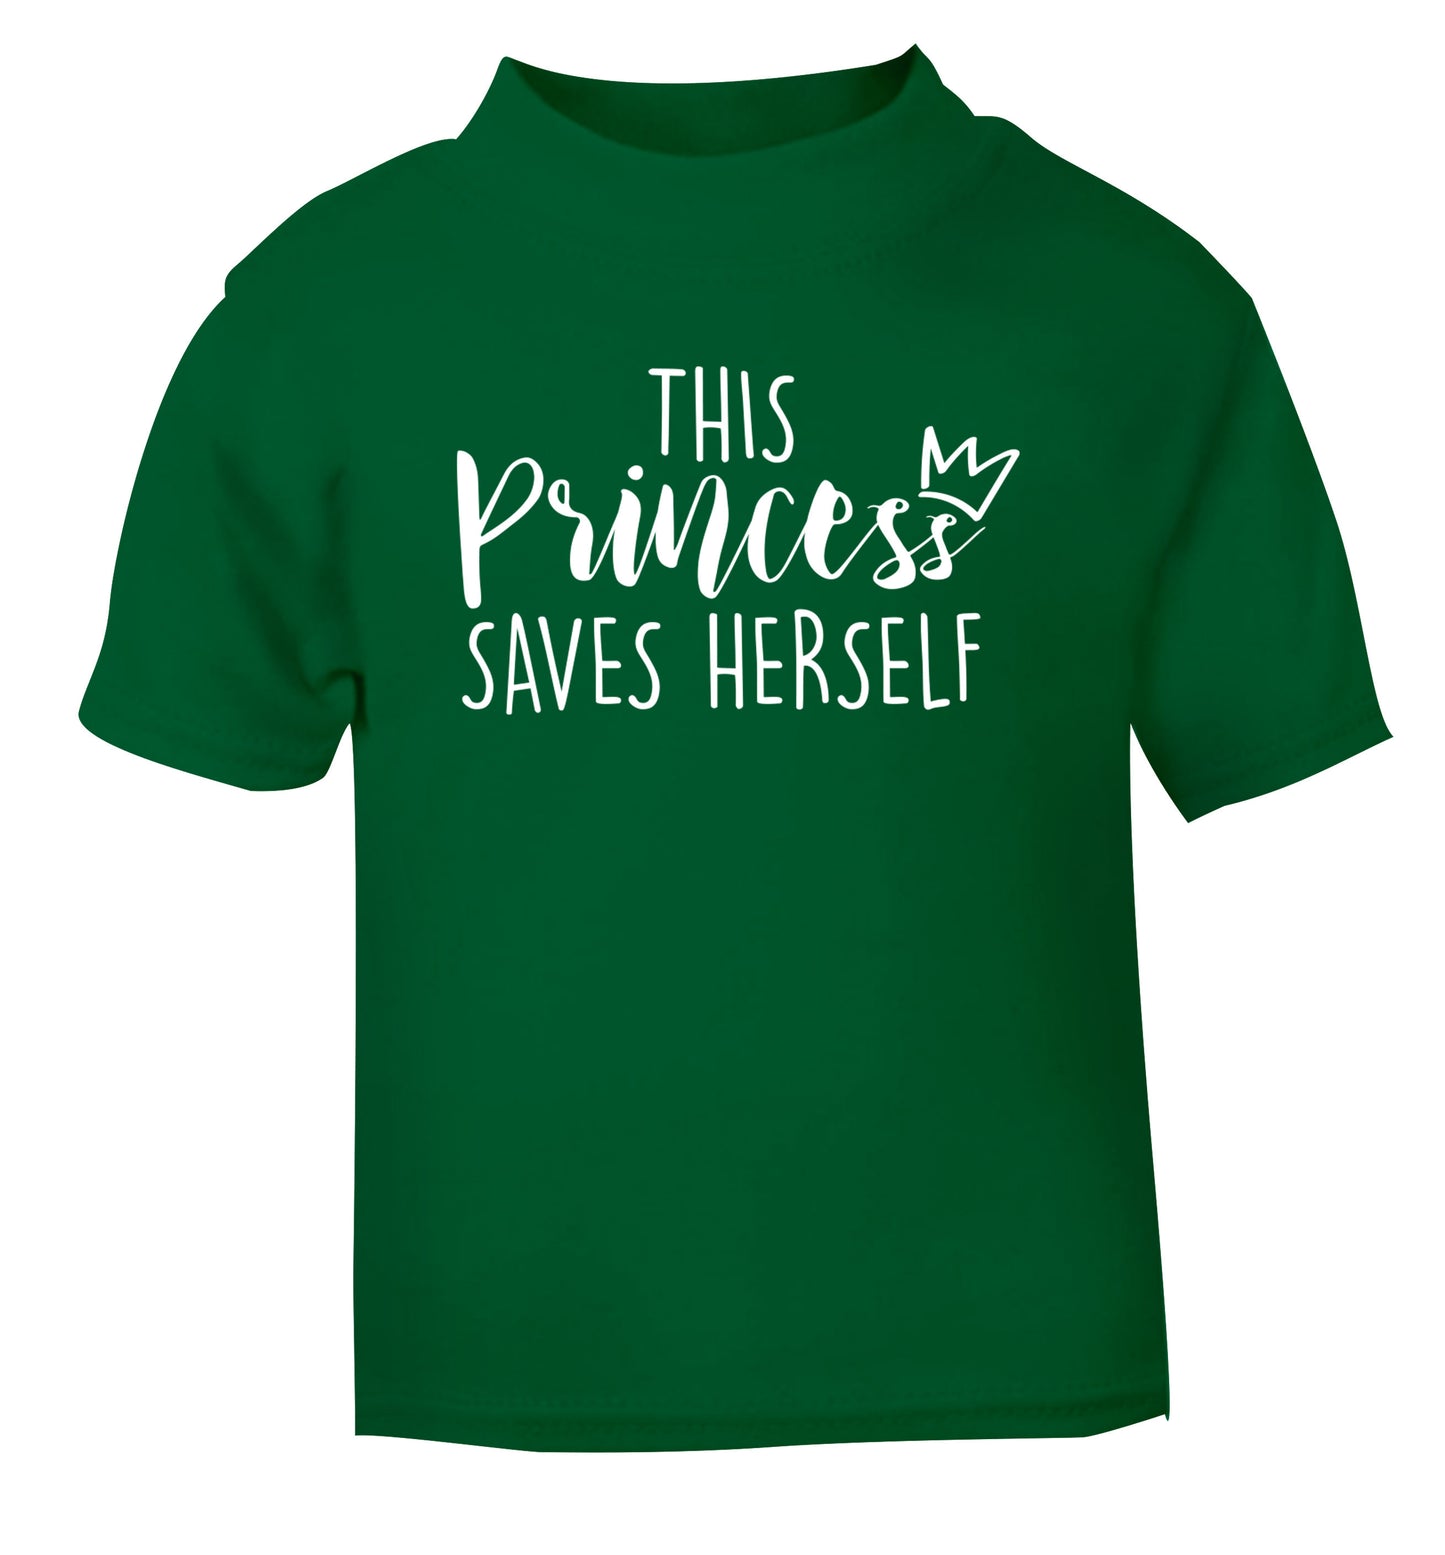 This princess saves herself green Baby Toddler Tshirt 2 Years